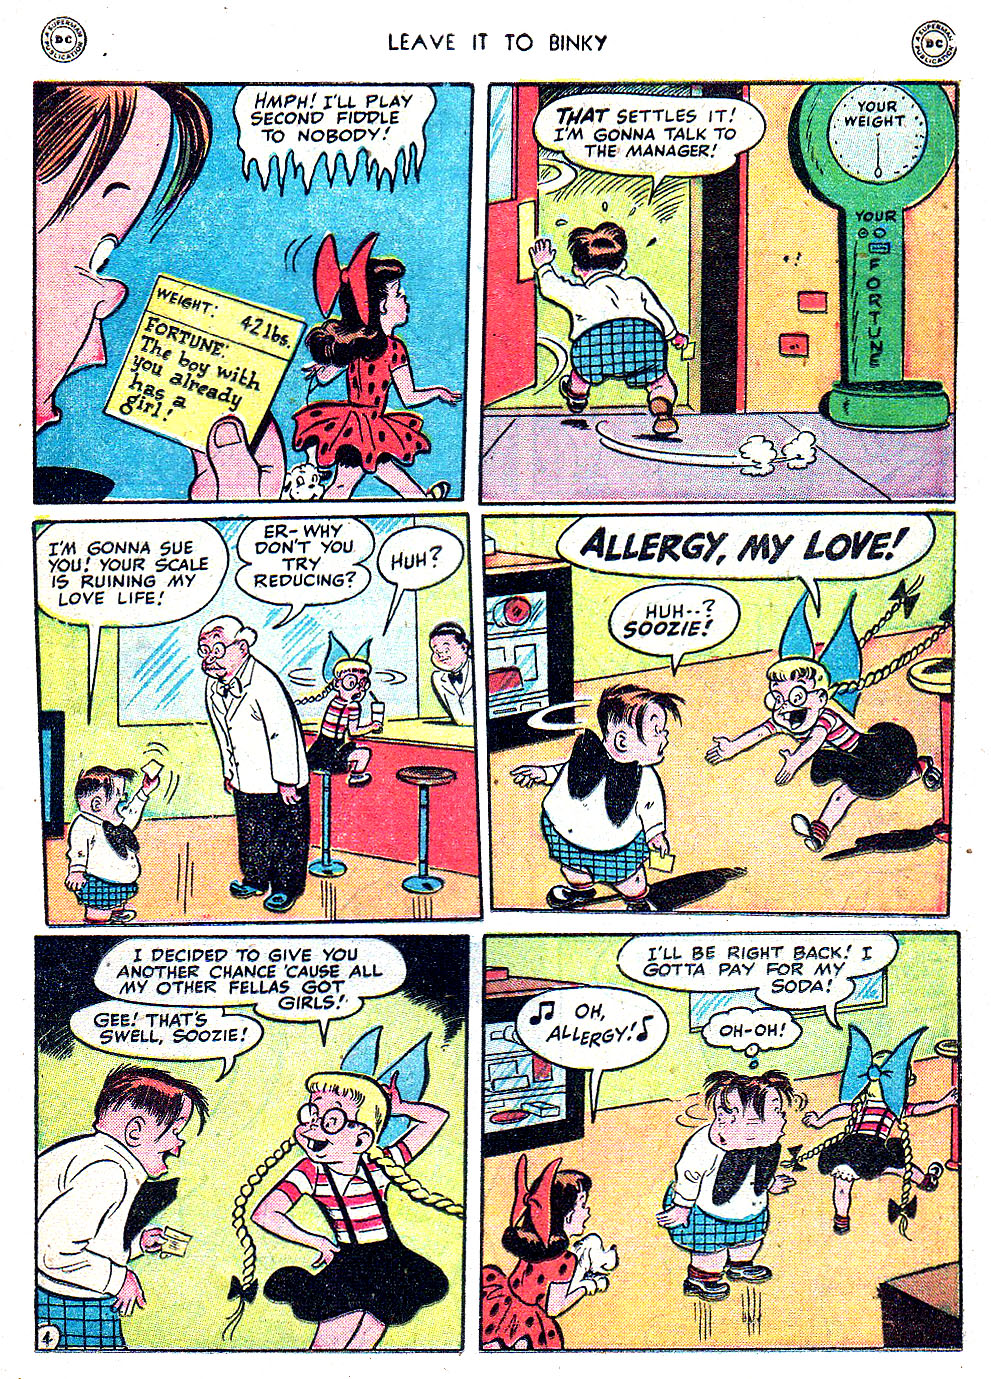 Read online Leave it to Binky comic -  Issue #4 - 37